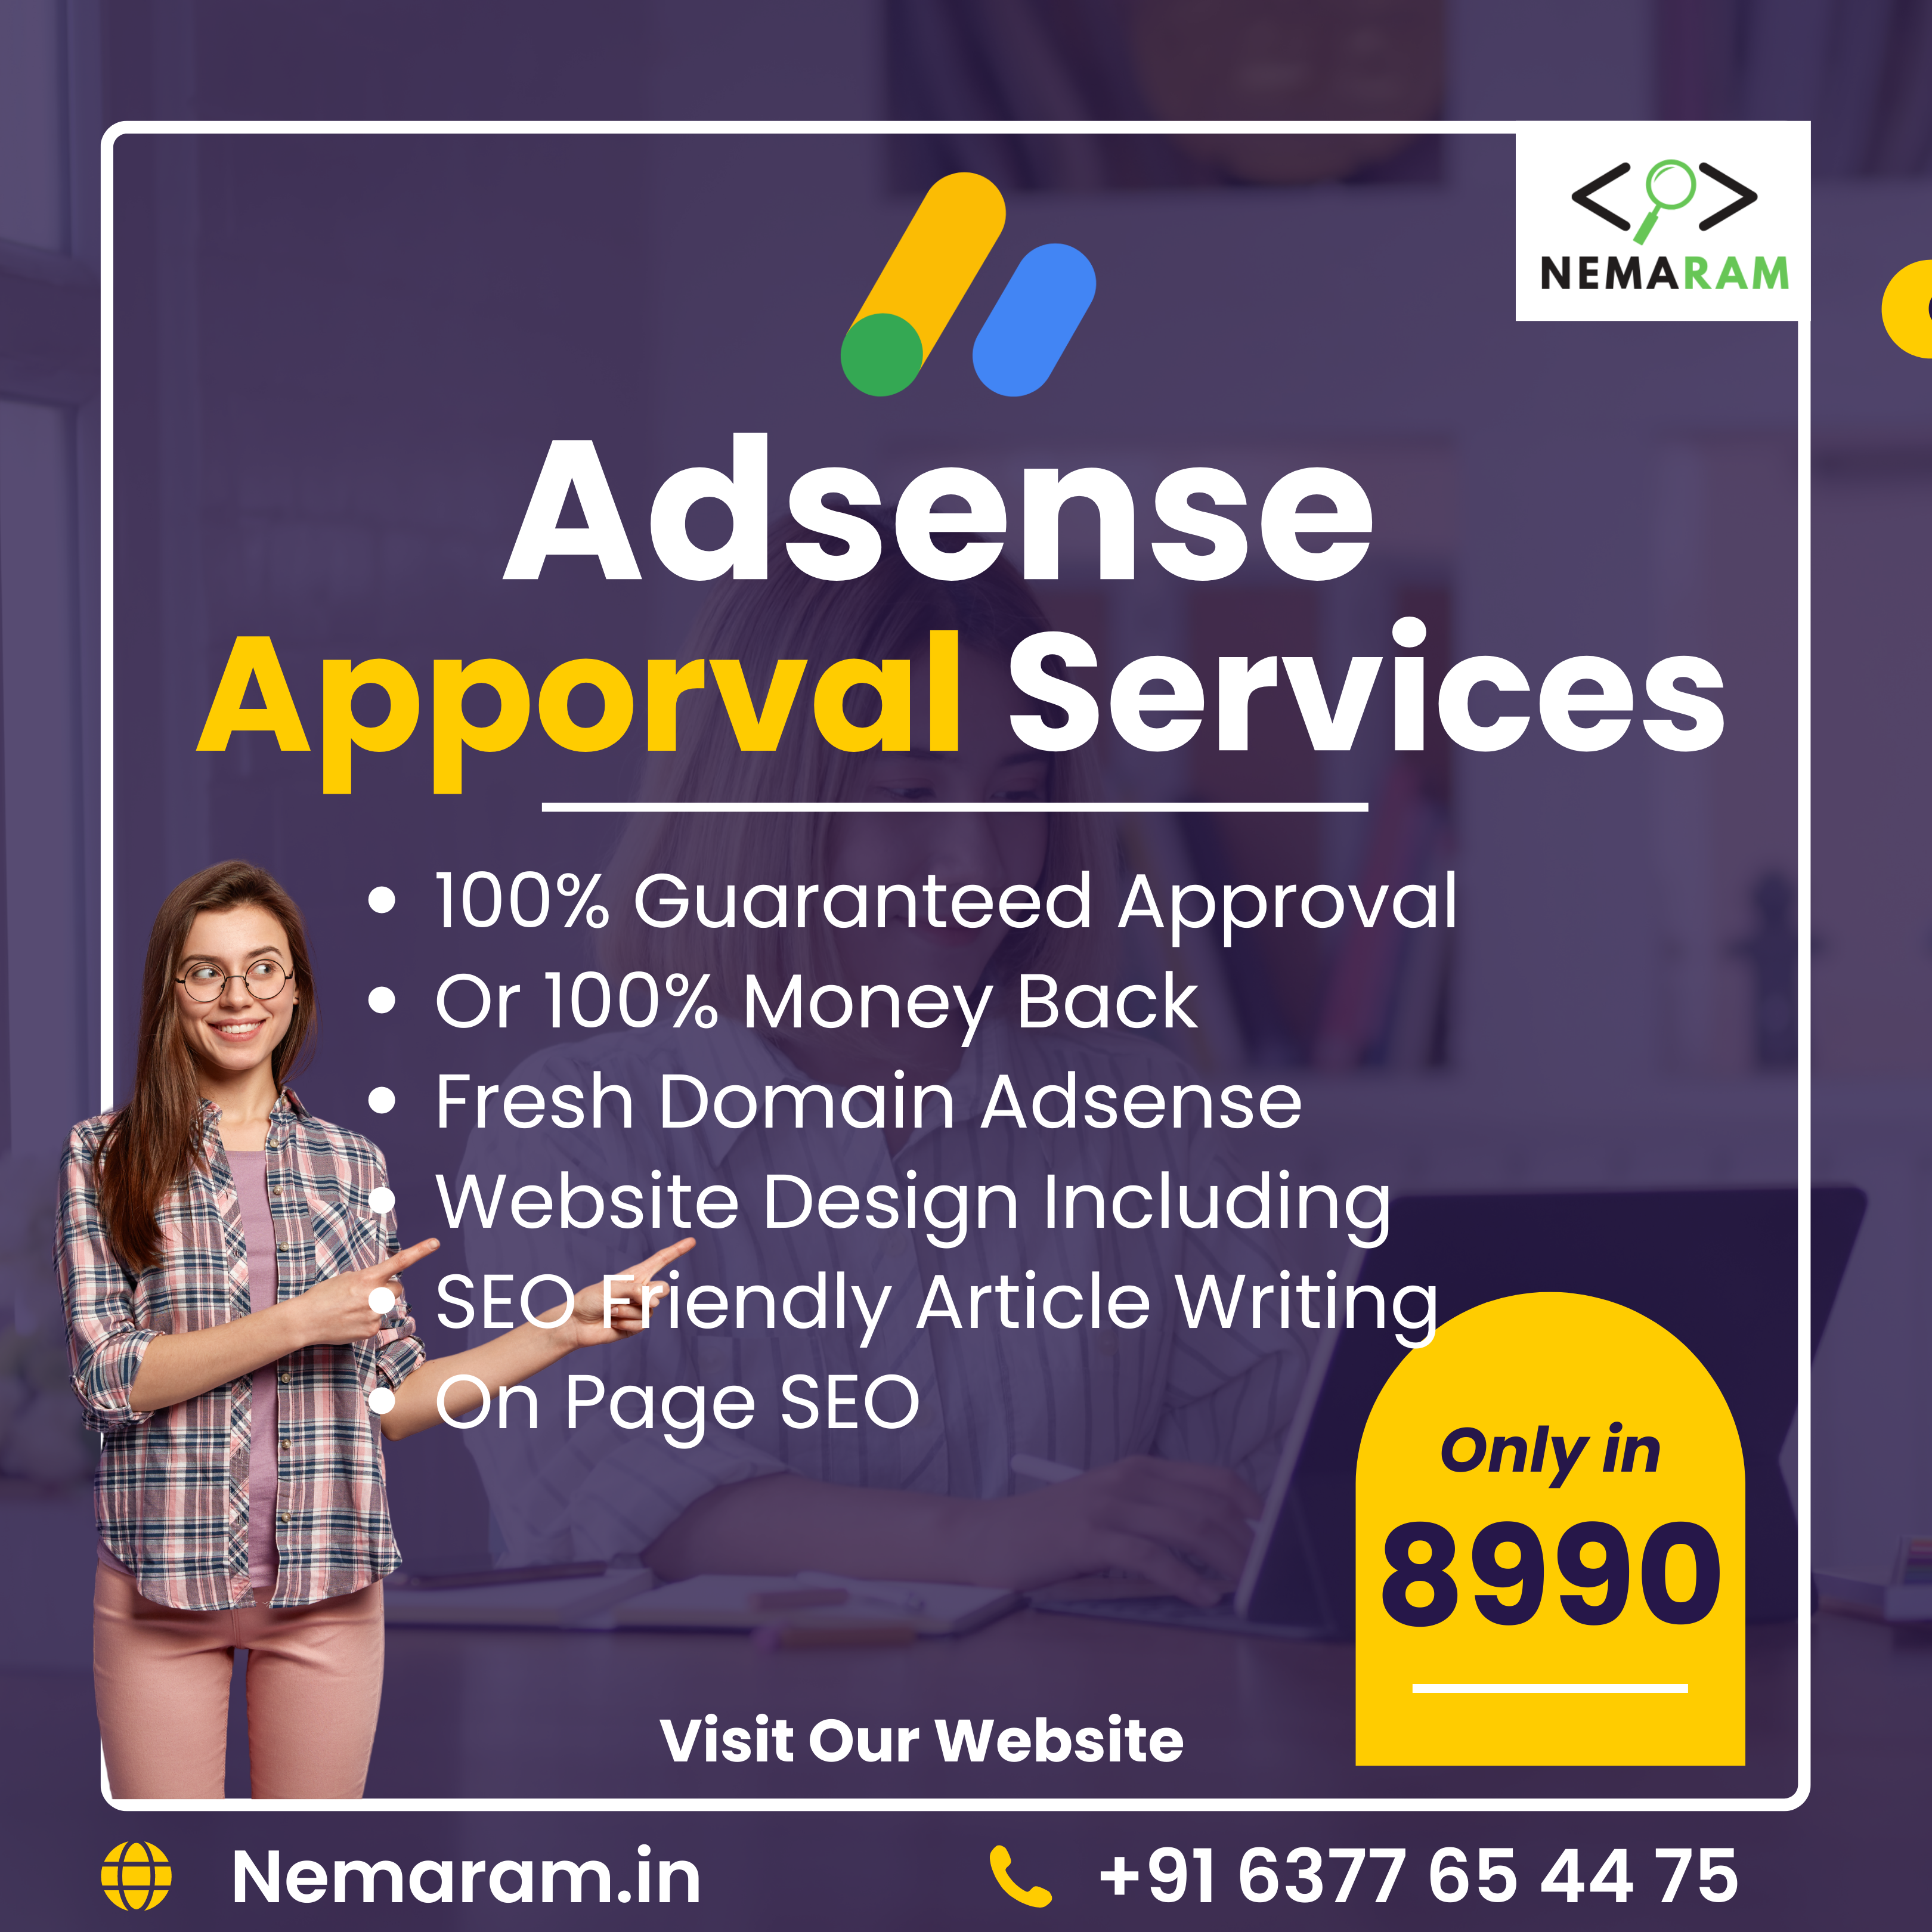 Adsense Apporval Service by Nemaram